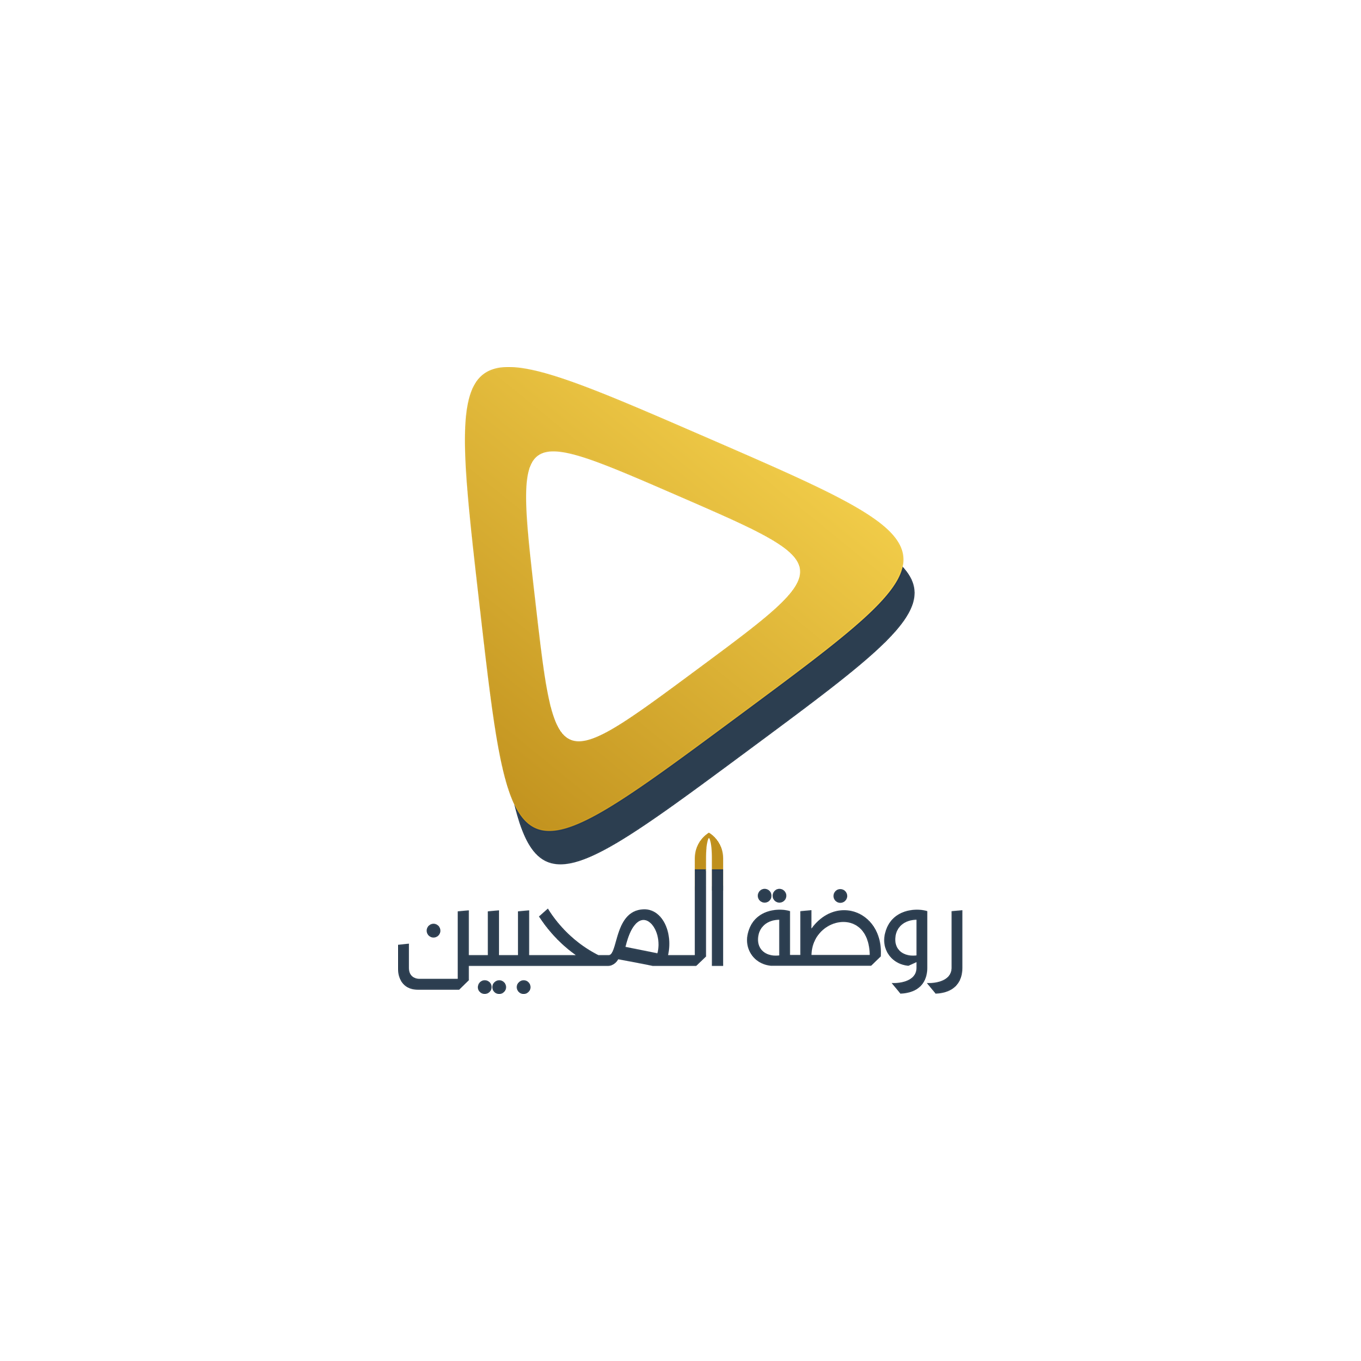 RM Media Logo